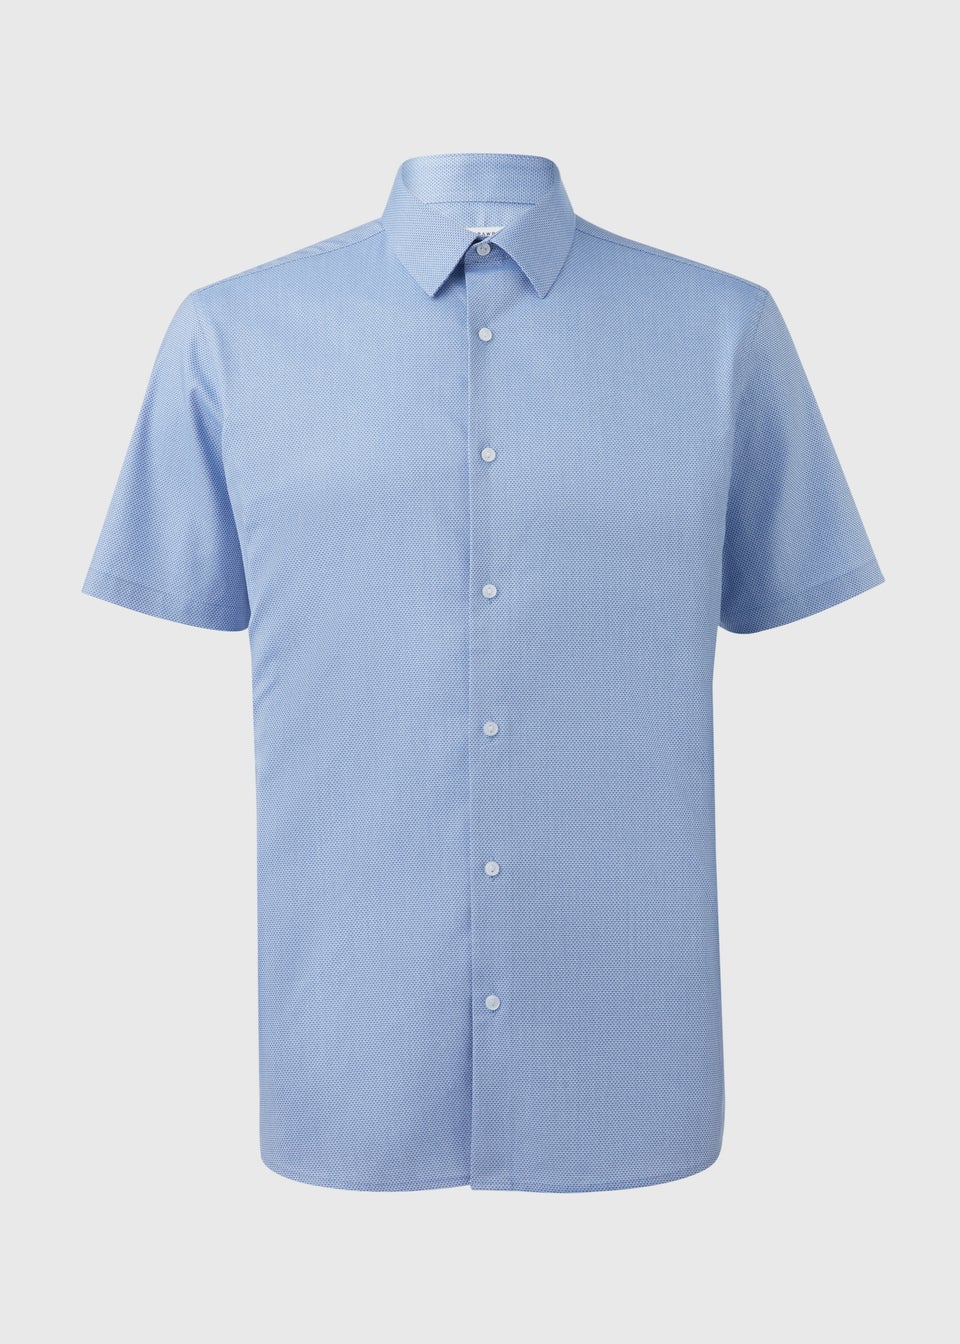 Taylor & Wright Blue Textured Shirt